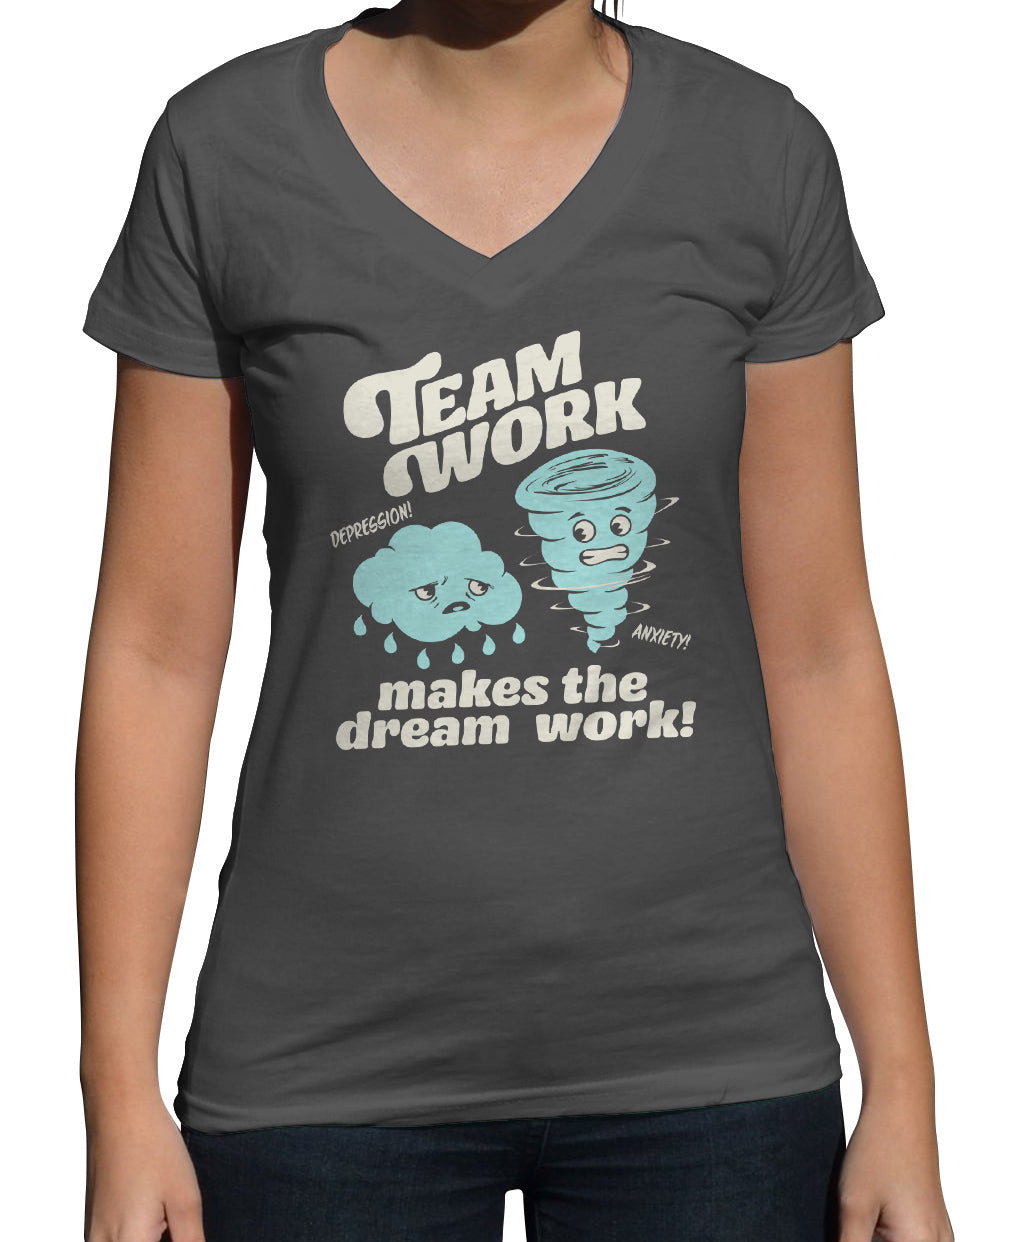 Women's Team Work Makes the Dream Work Vneck T-Shirt